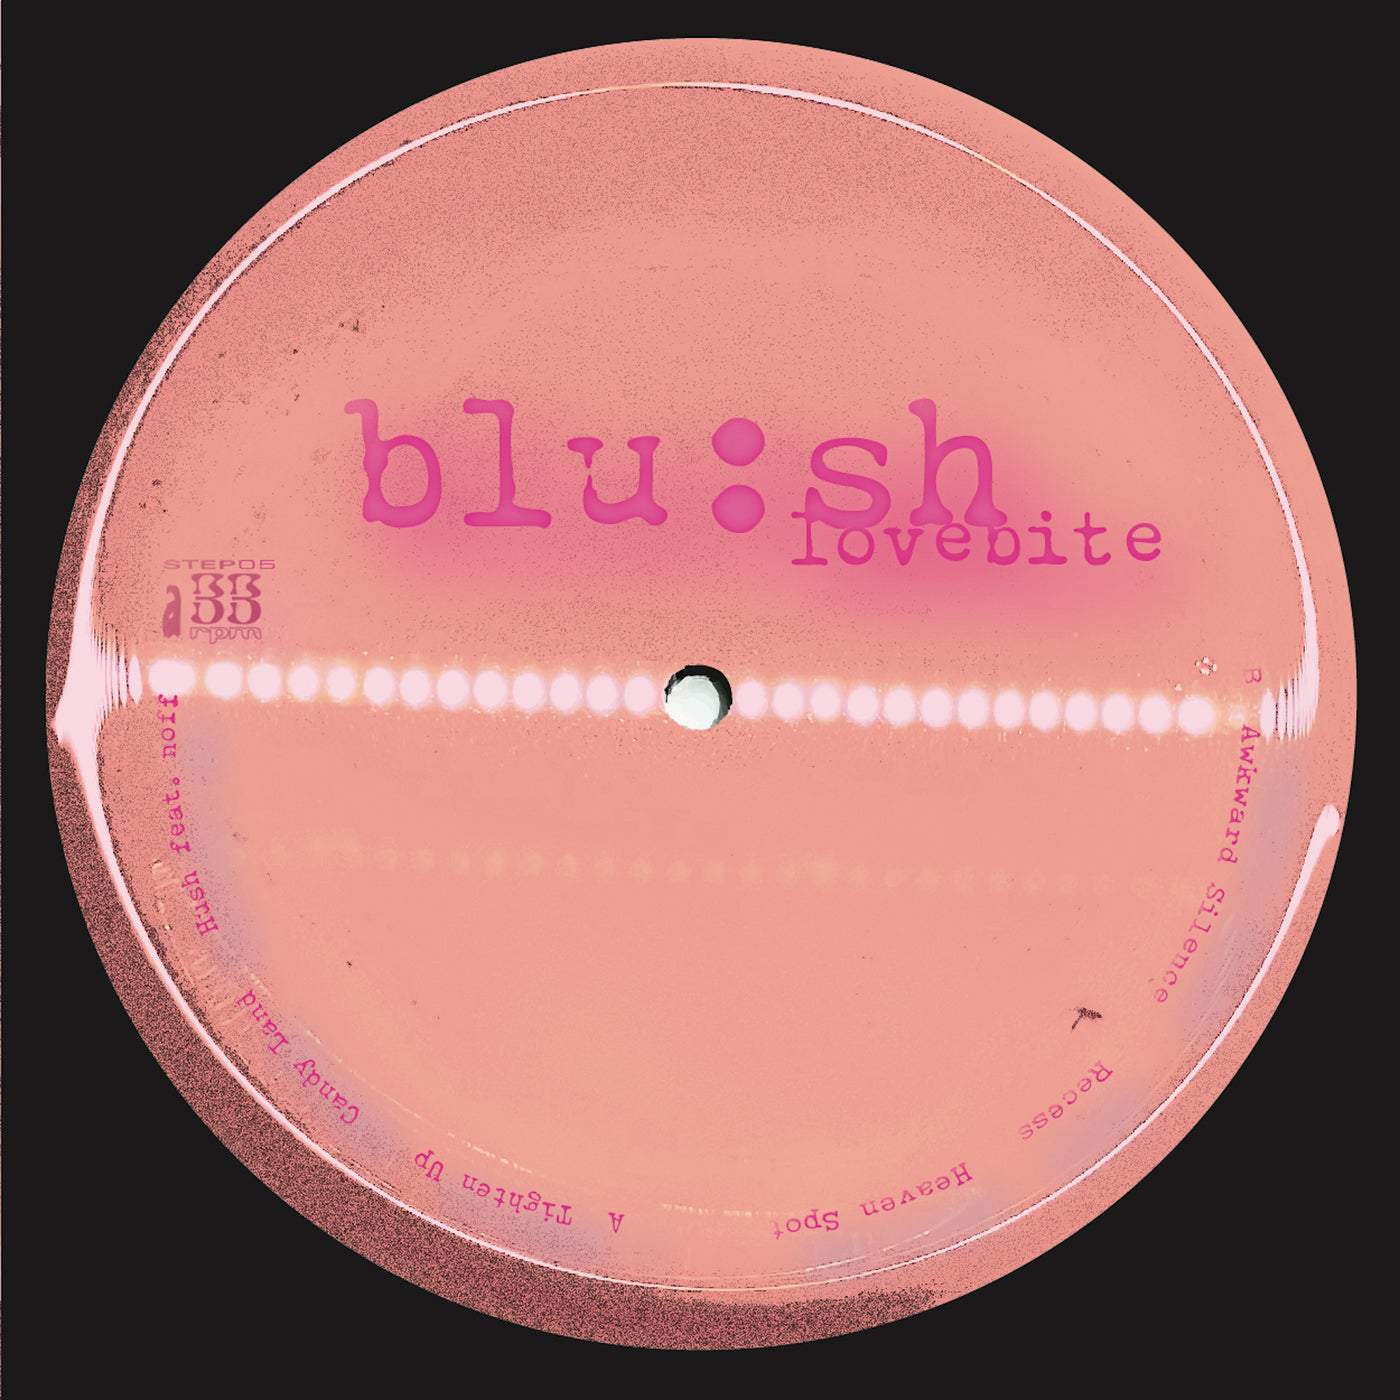 Download Blu:sh, Noff - Lovebite on Electrobuzz